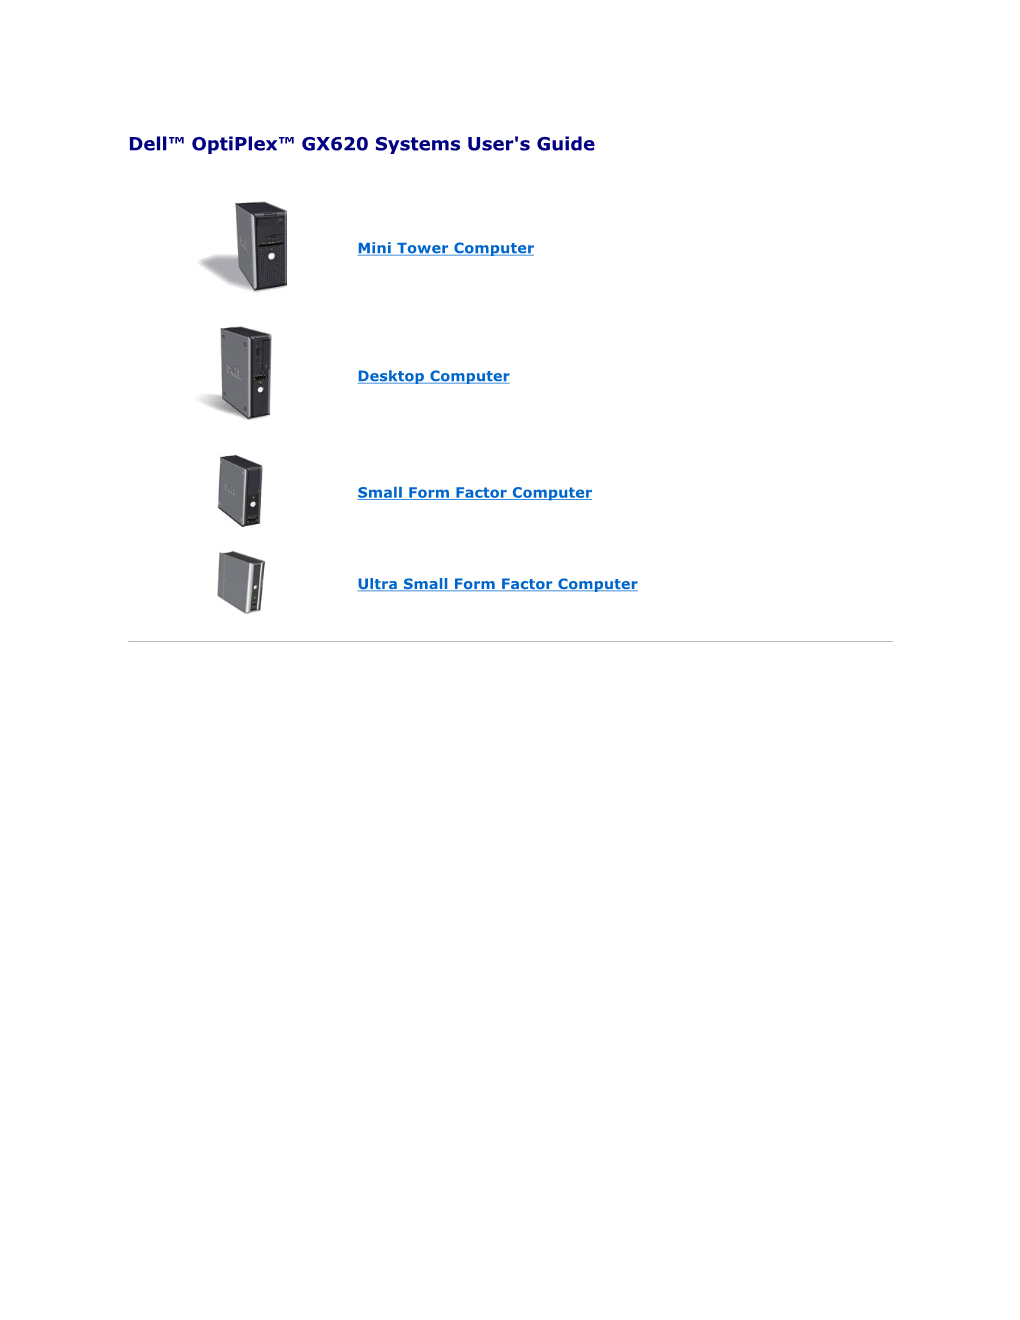 Dell Optiplex GX620 Systems User's Guide